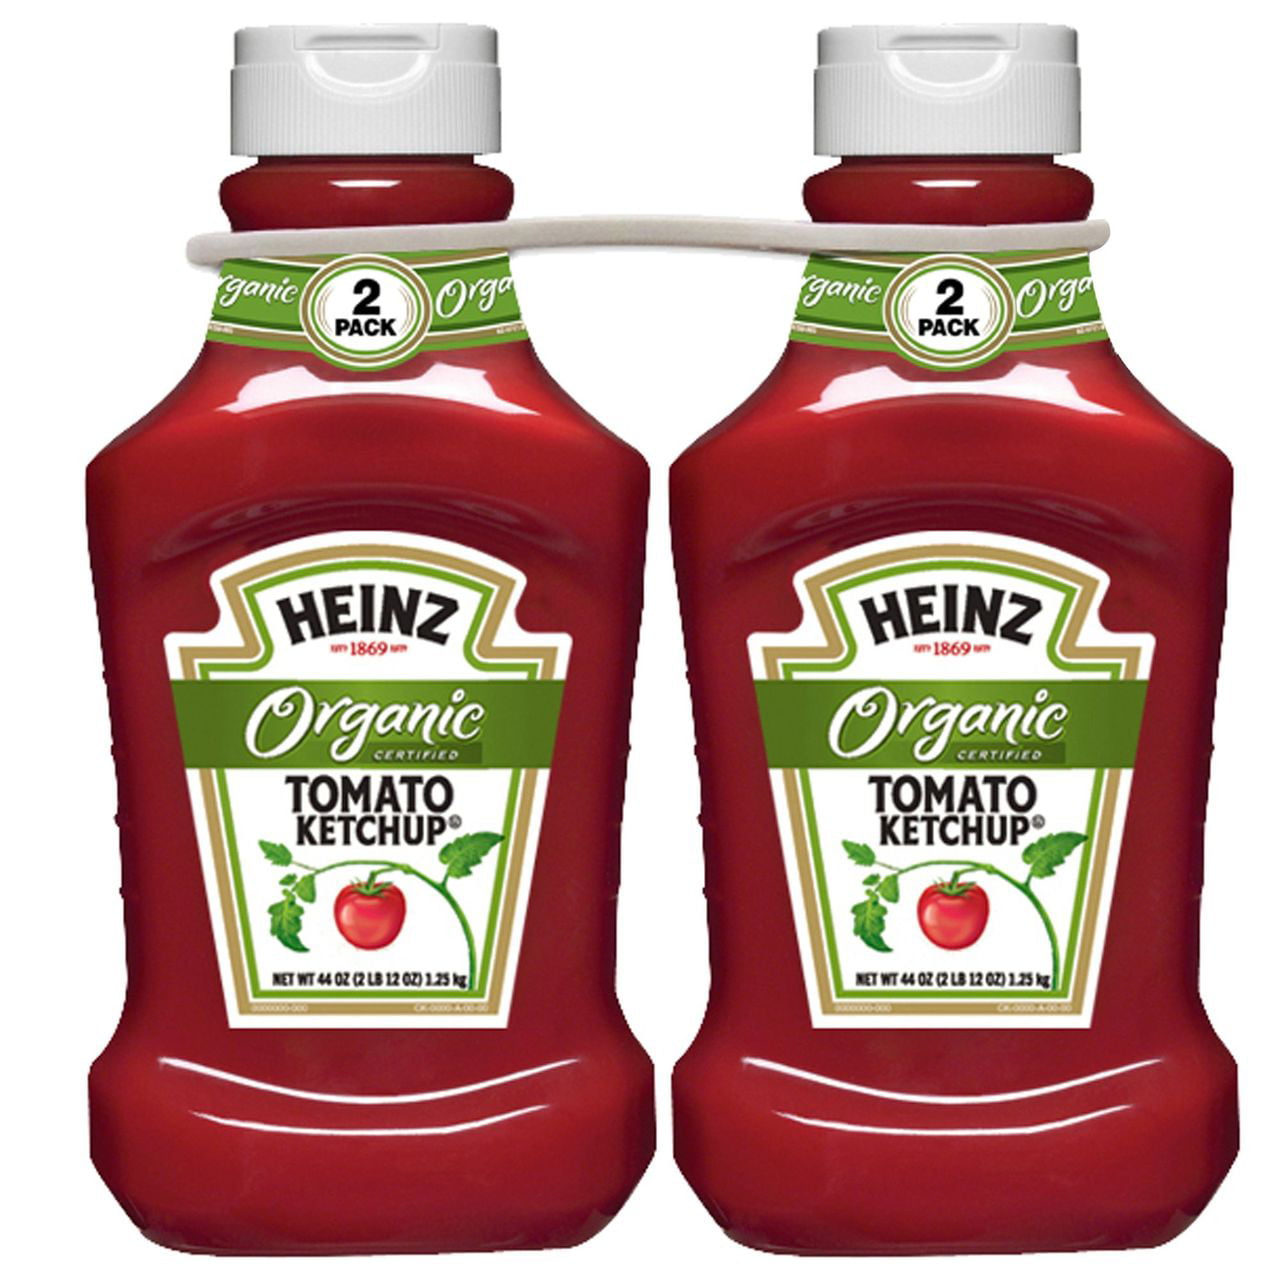 Heinz Organic кетчуп. "Ketchup ""Heinz"" Tomato 570g  ". Heinz Tomato Ketchup Organic. Акмалько соусы. Tomato ketchup